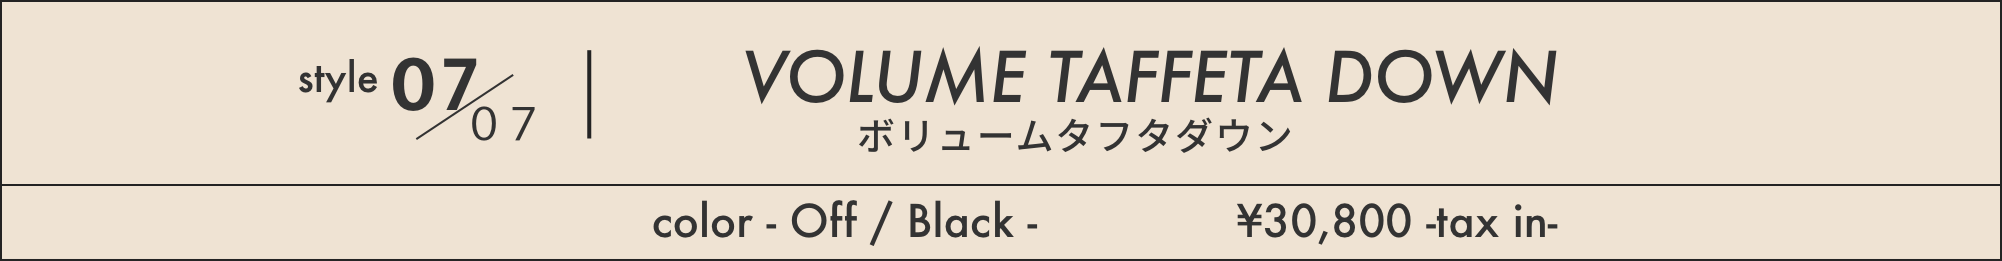 style07/07 VOLUME TAFFETA DOWN ボリュームタフタダウン color - Off / Black - ¥30,800 -tax in-